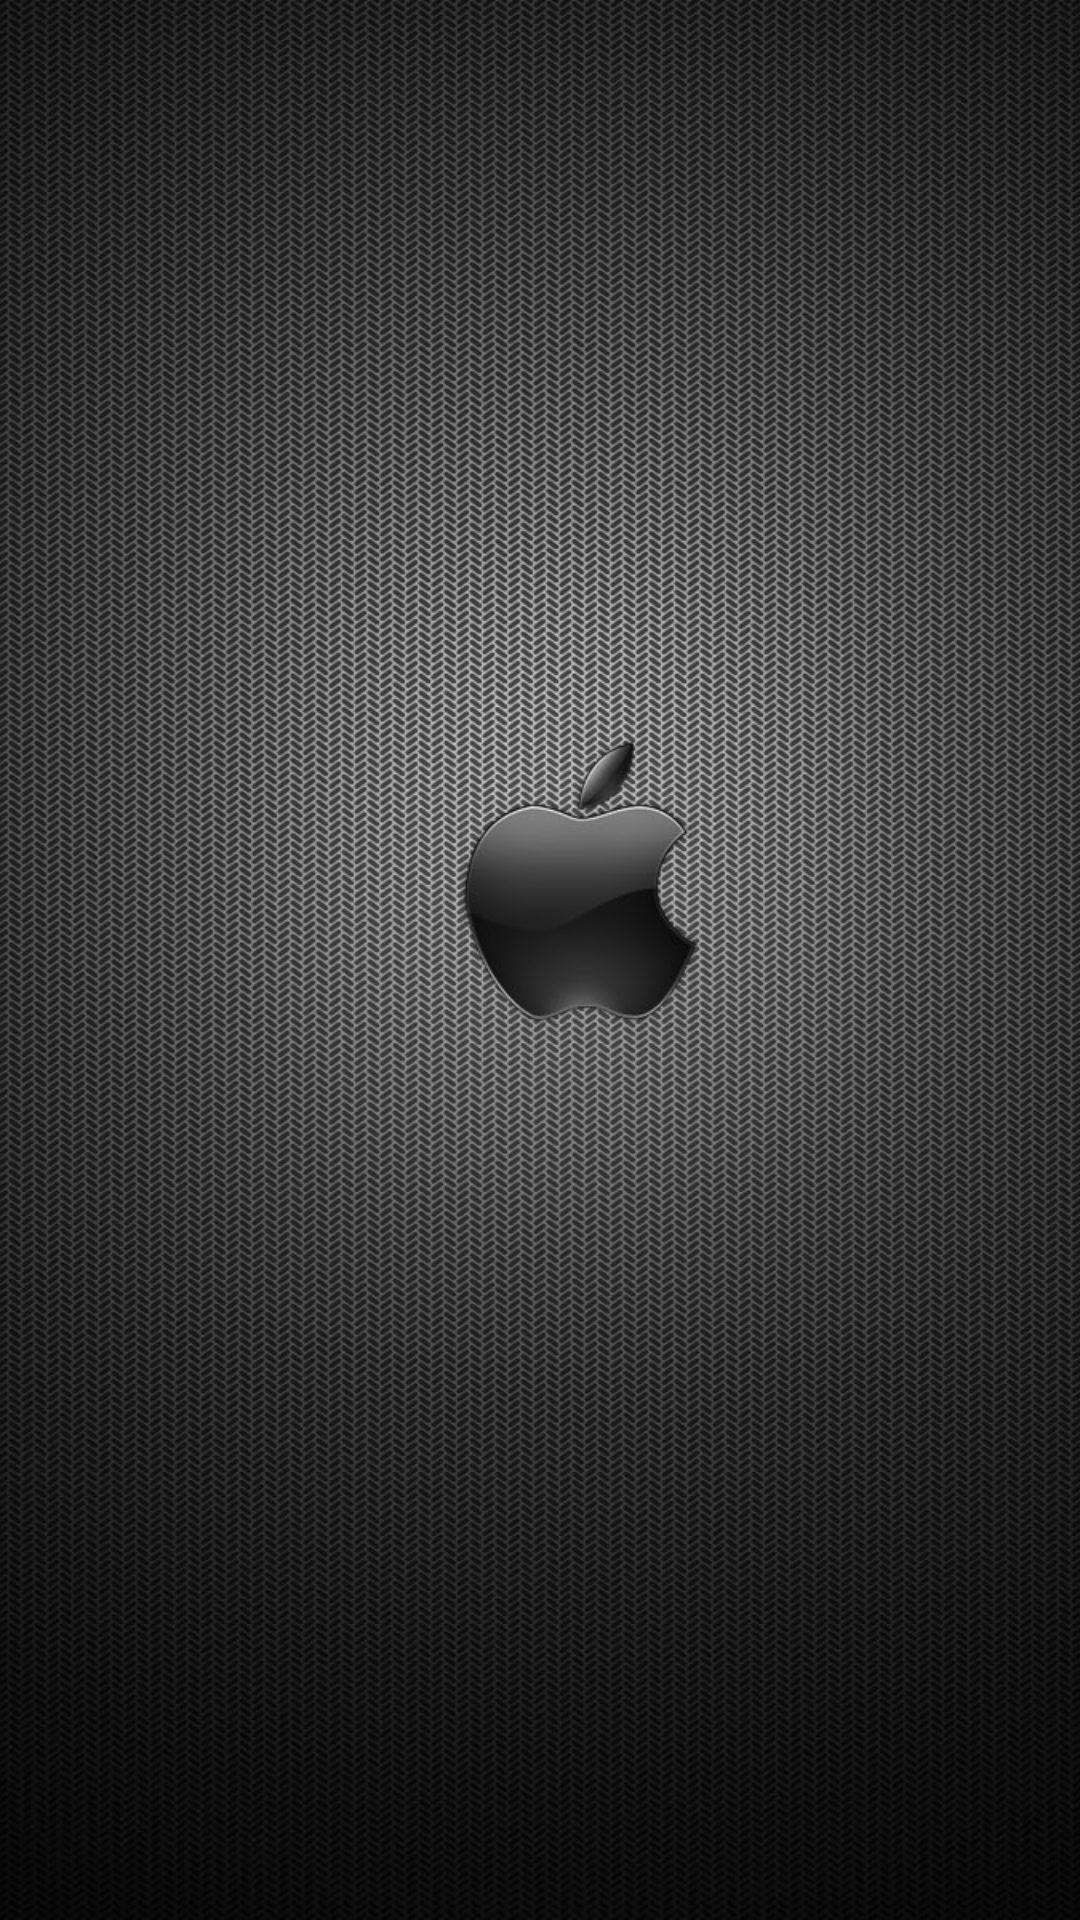 Dark Apple Logo HD Wallpaper. HD Wallpaper Download